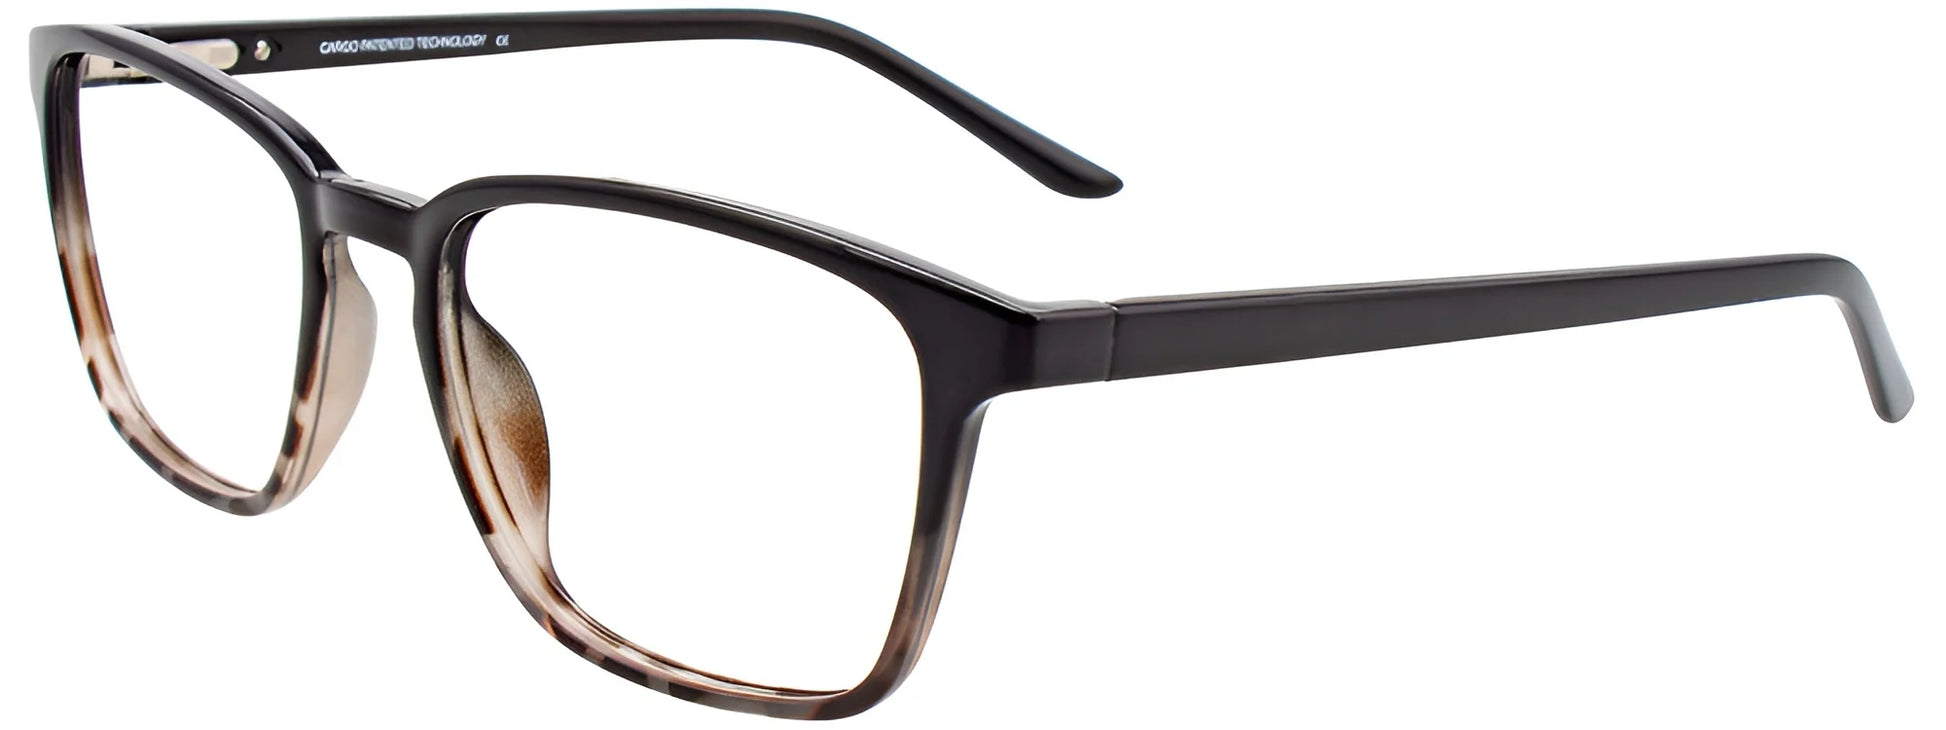 Cargo C5052 Eyeglasses Black & Black Marbled